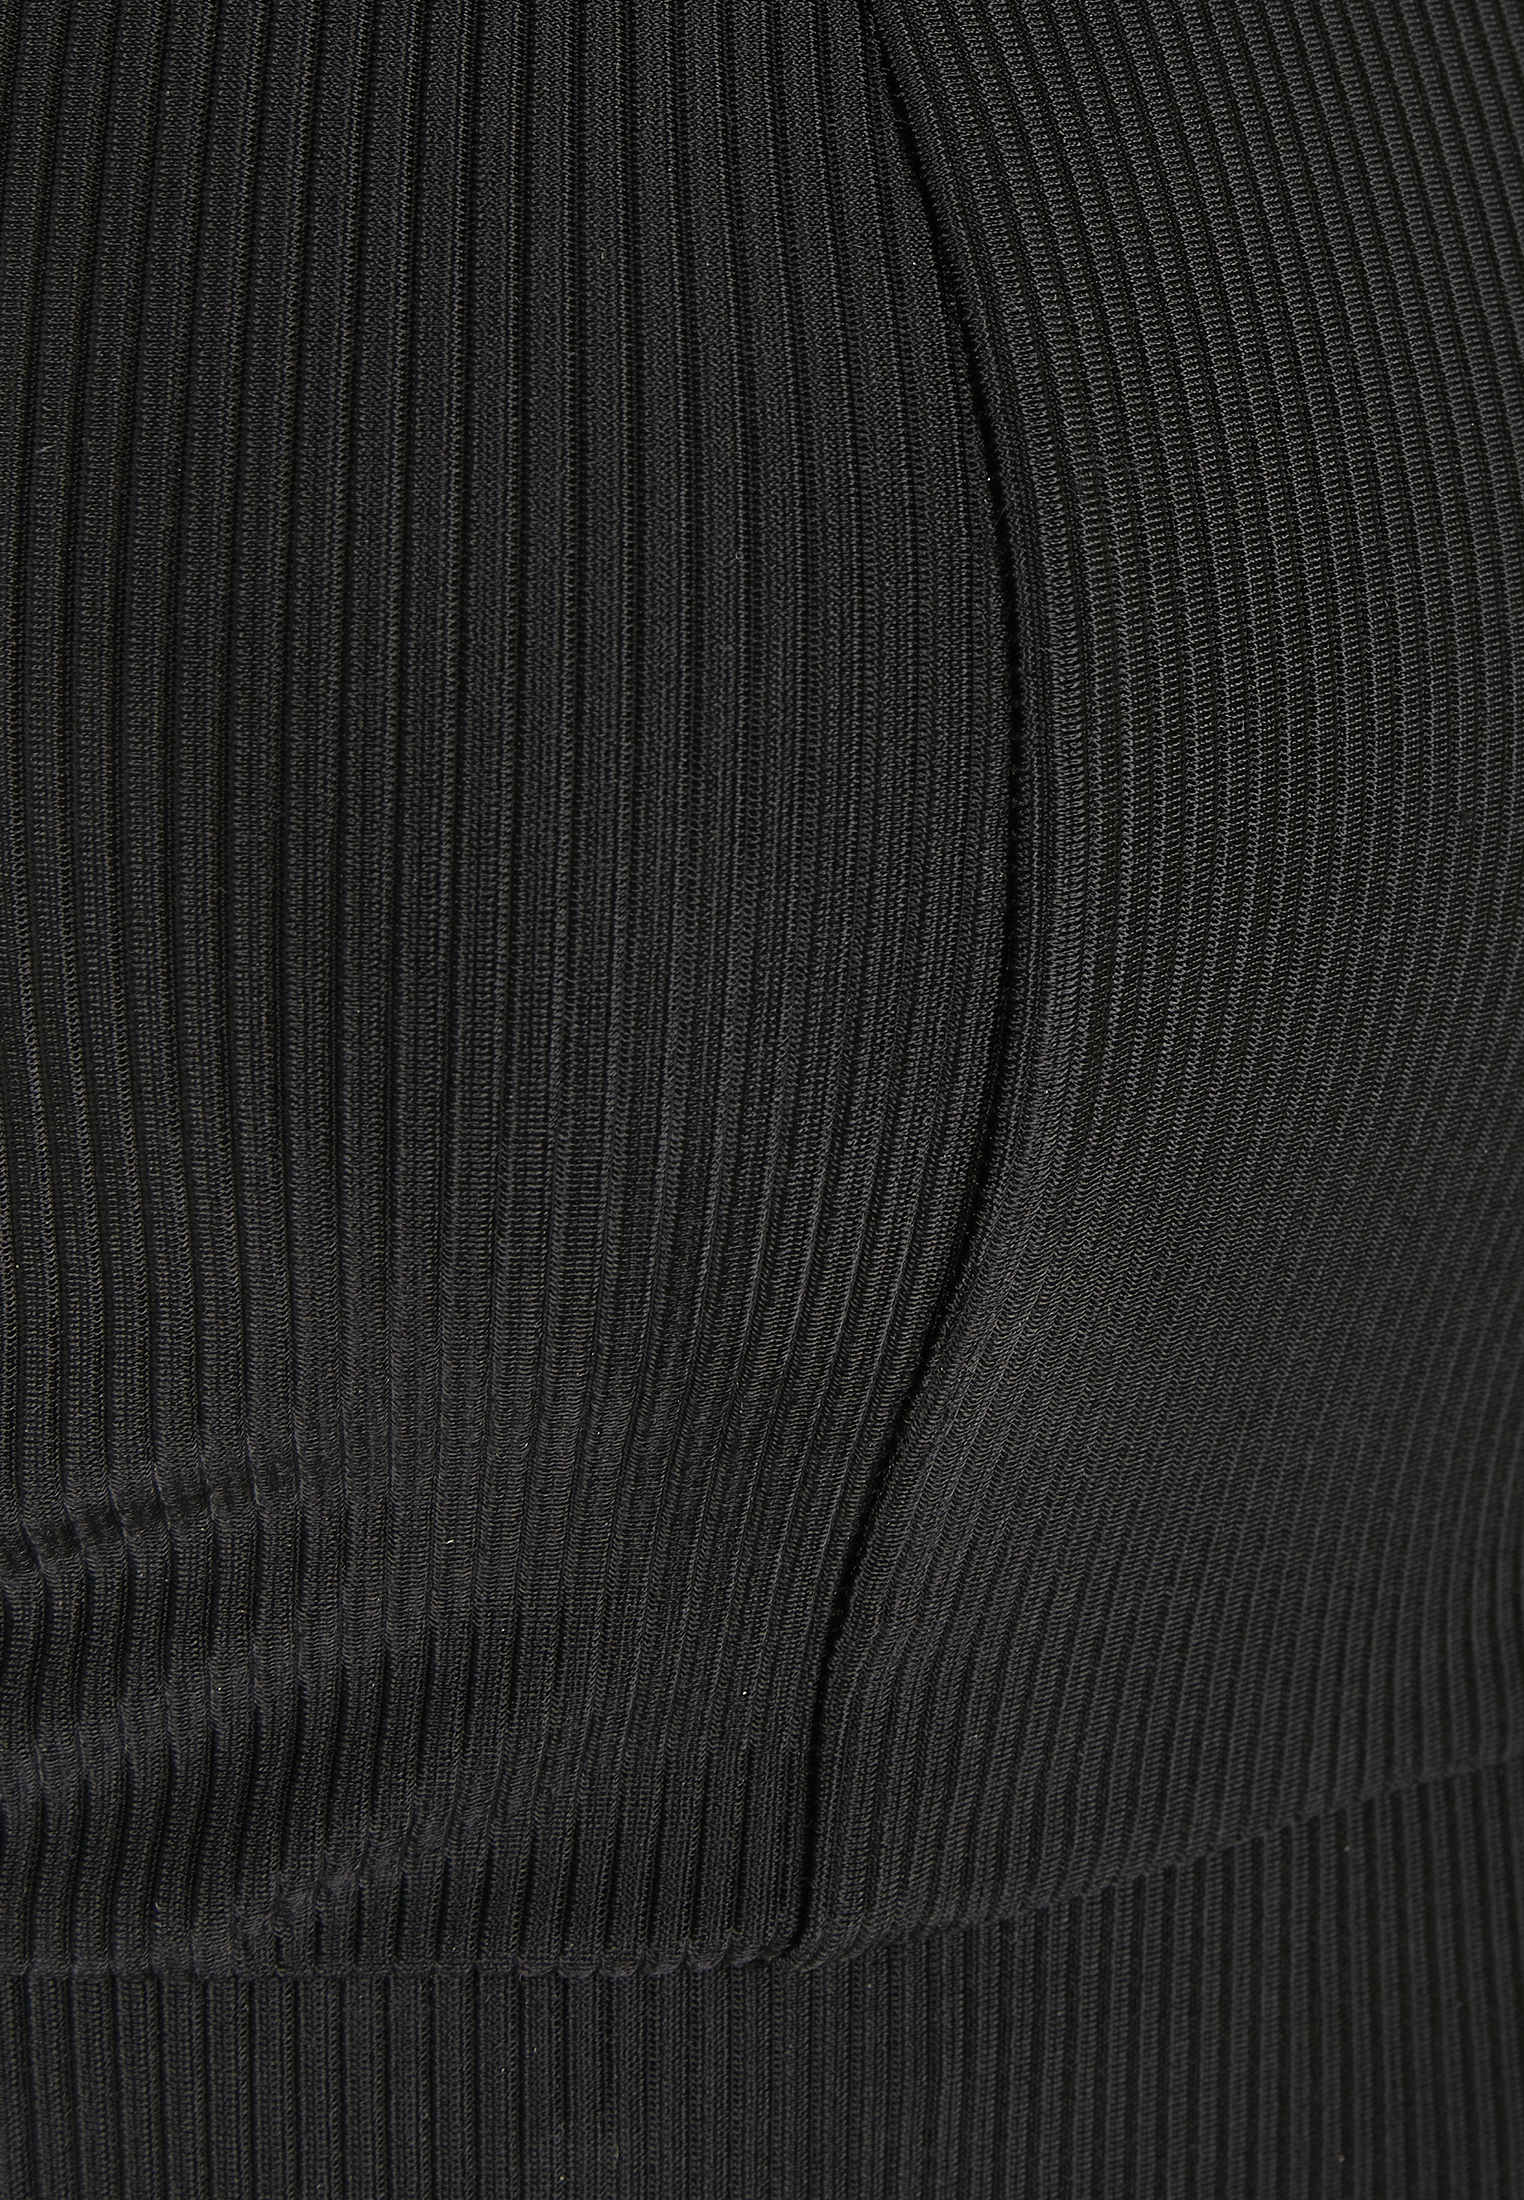 Tops & Tanks Ladies Cropped Shiny Rib Top in Farbe black